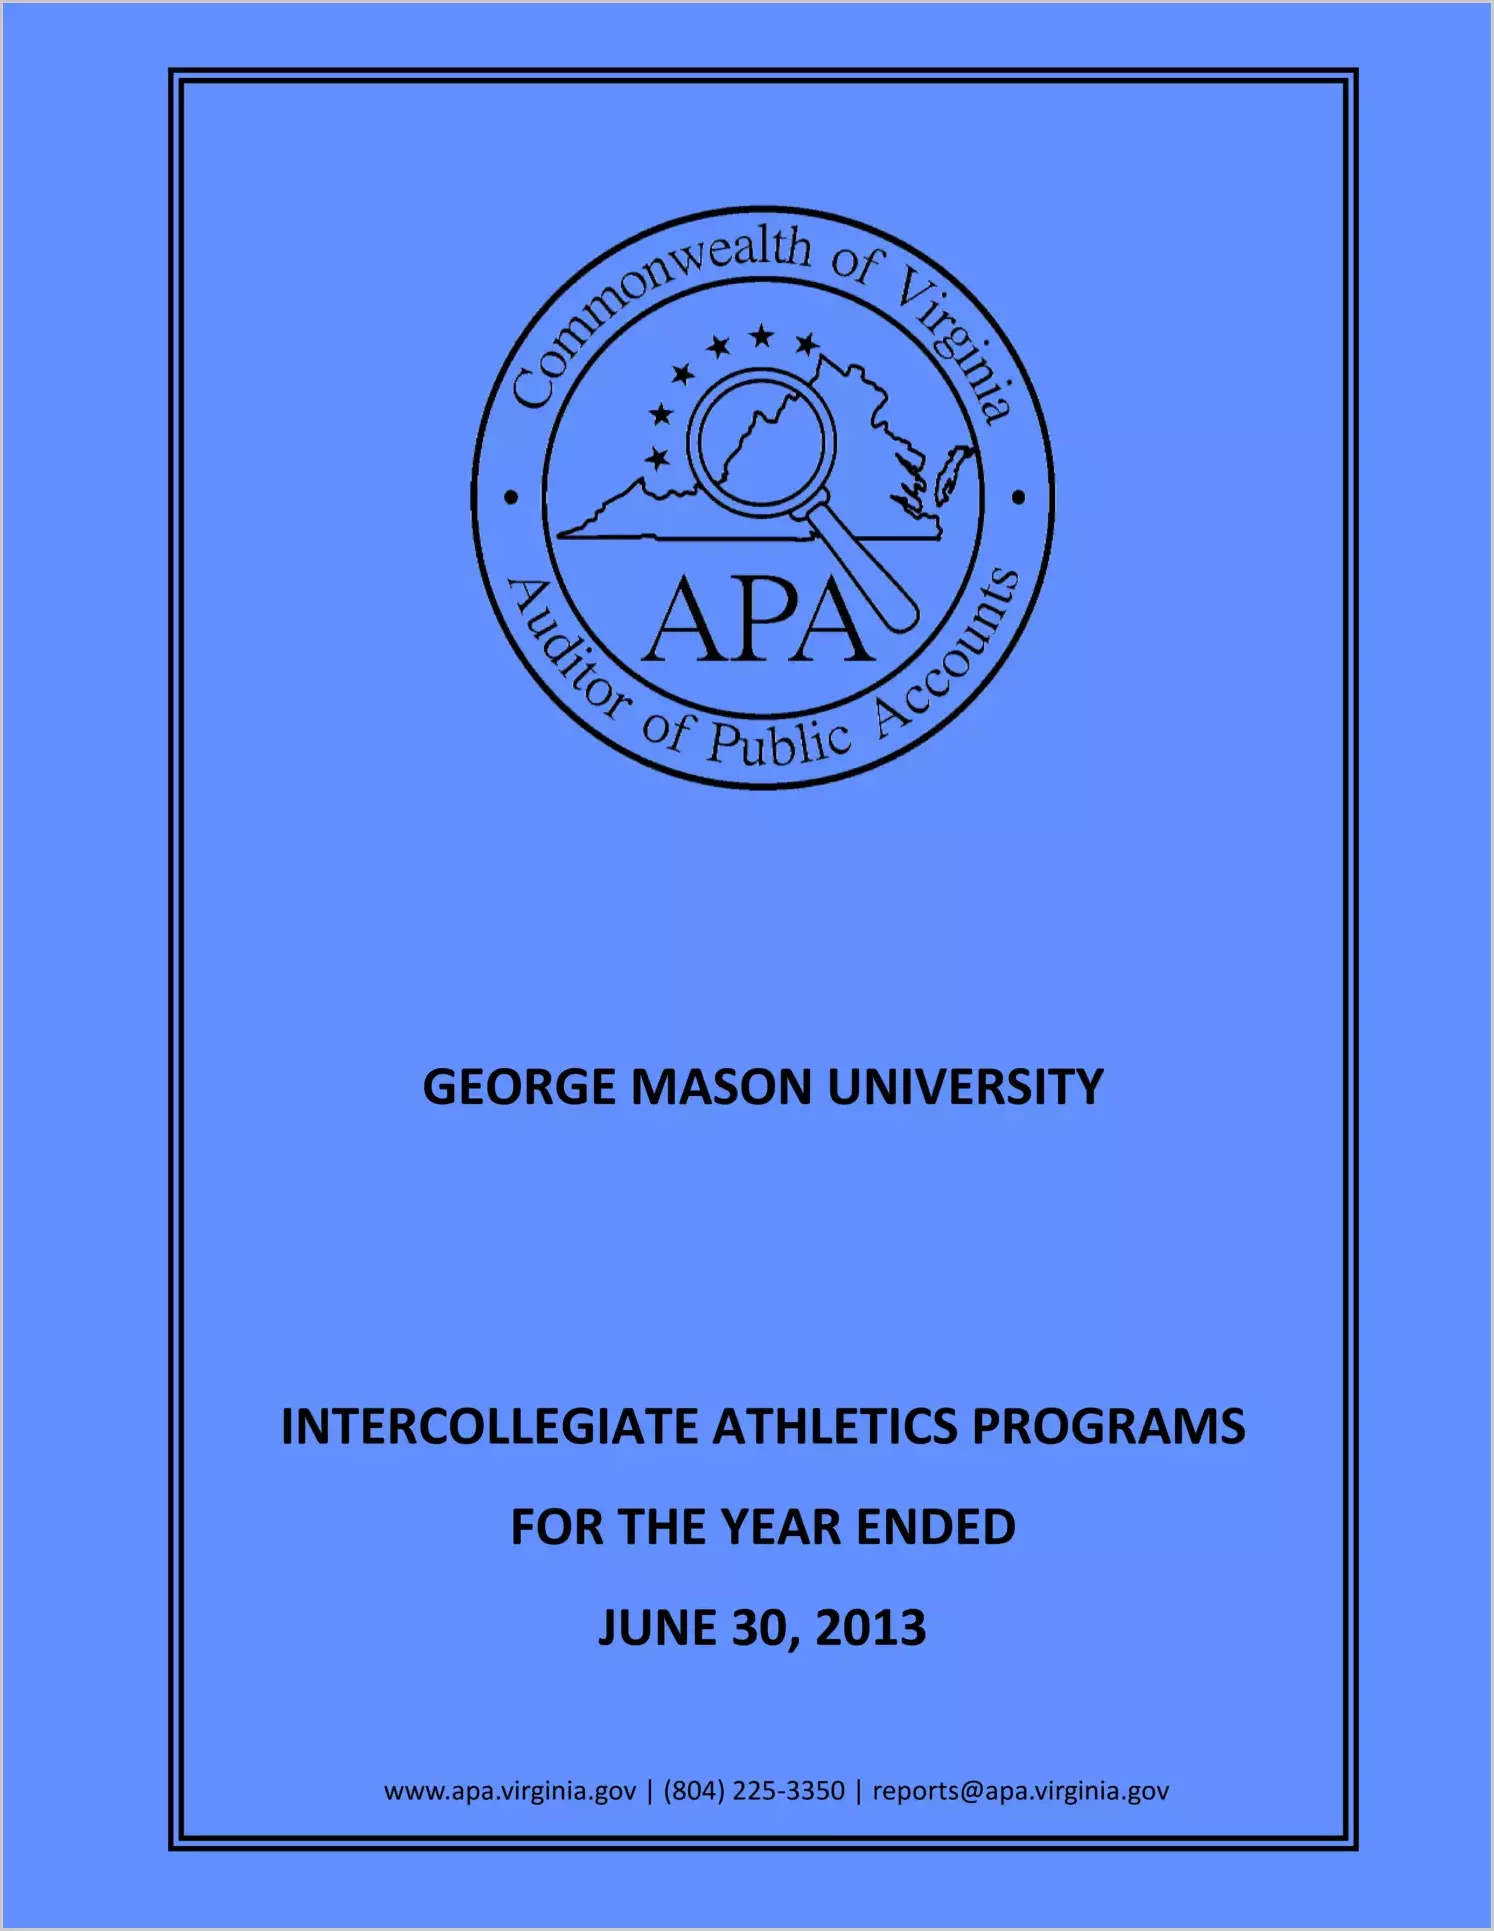 George Mason University Intercollegiate Athletics Programs for the year ended June 30, 2013